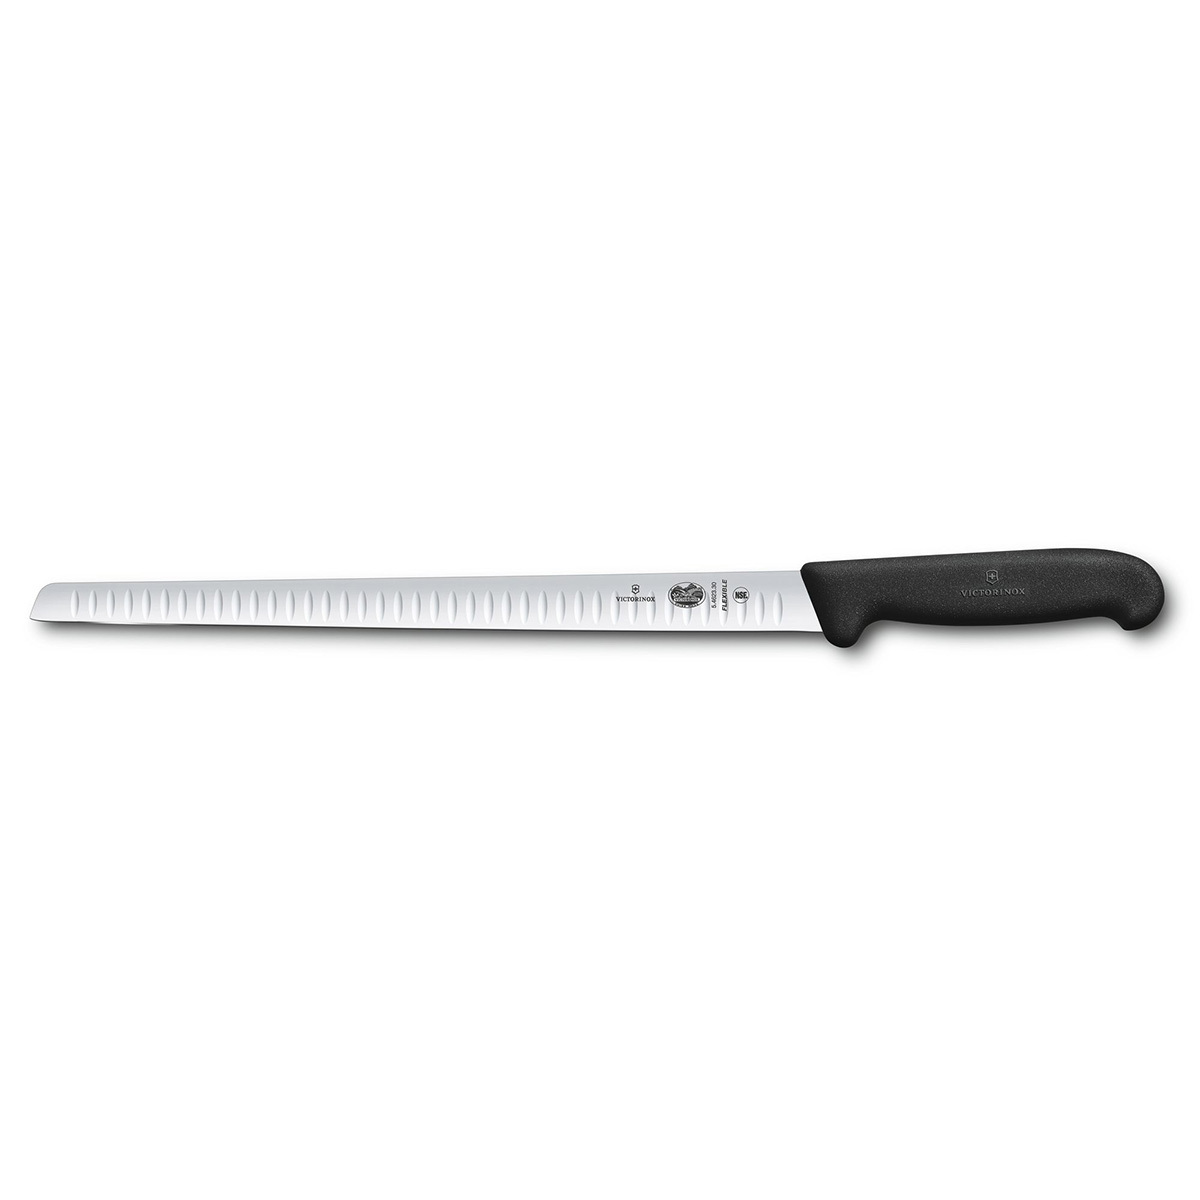 Кухонный нож рыбы Victorinox 5.4623.30 кухонный обвалочный нож victorinox 5 6303 15